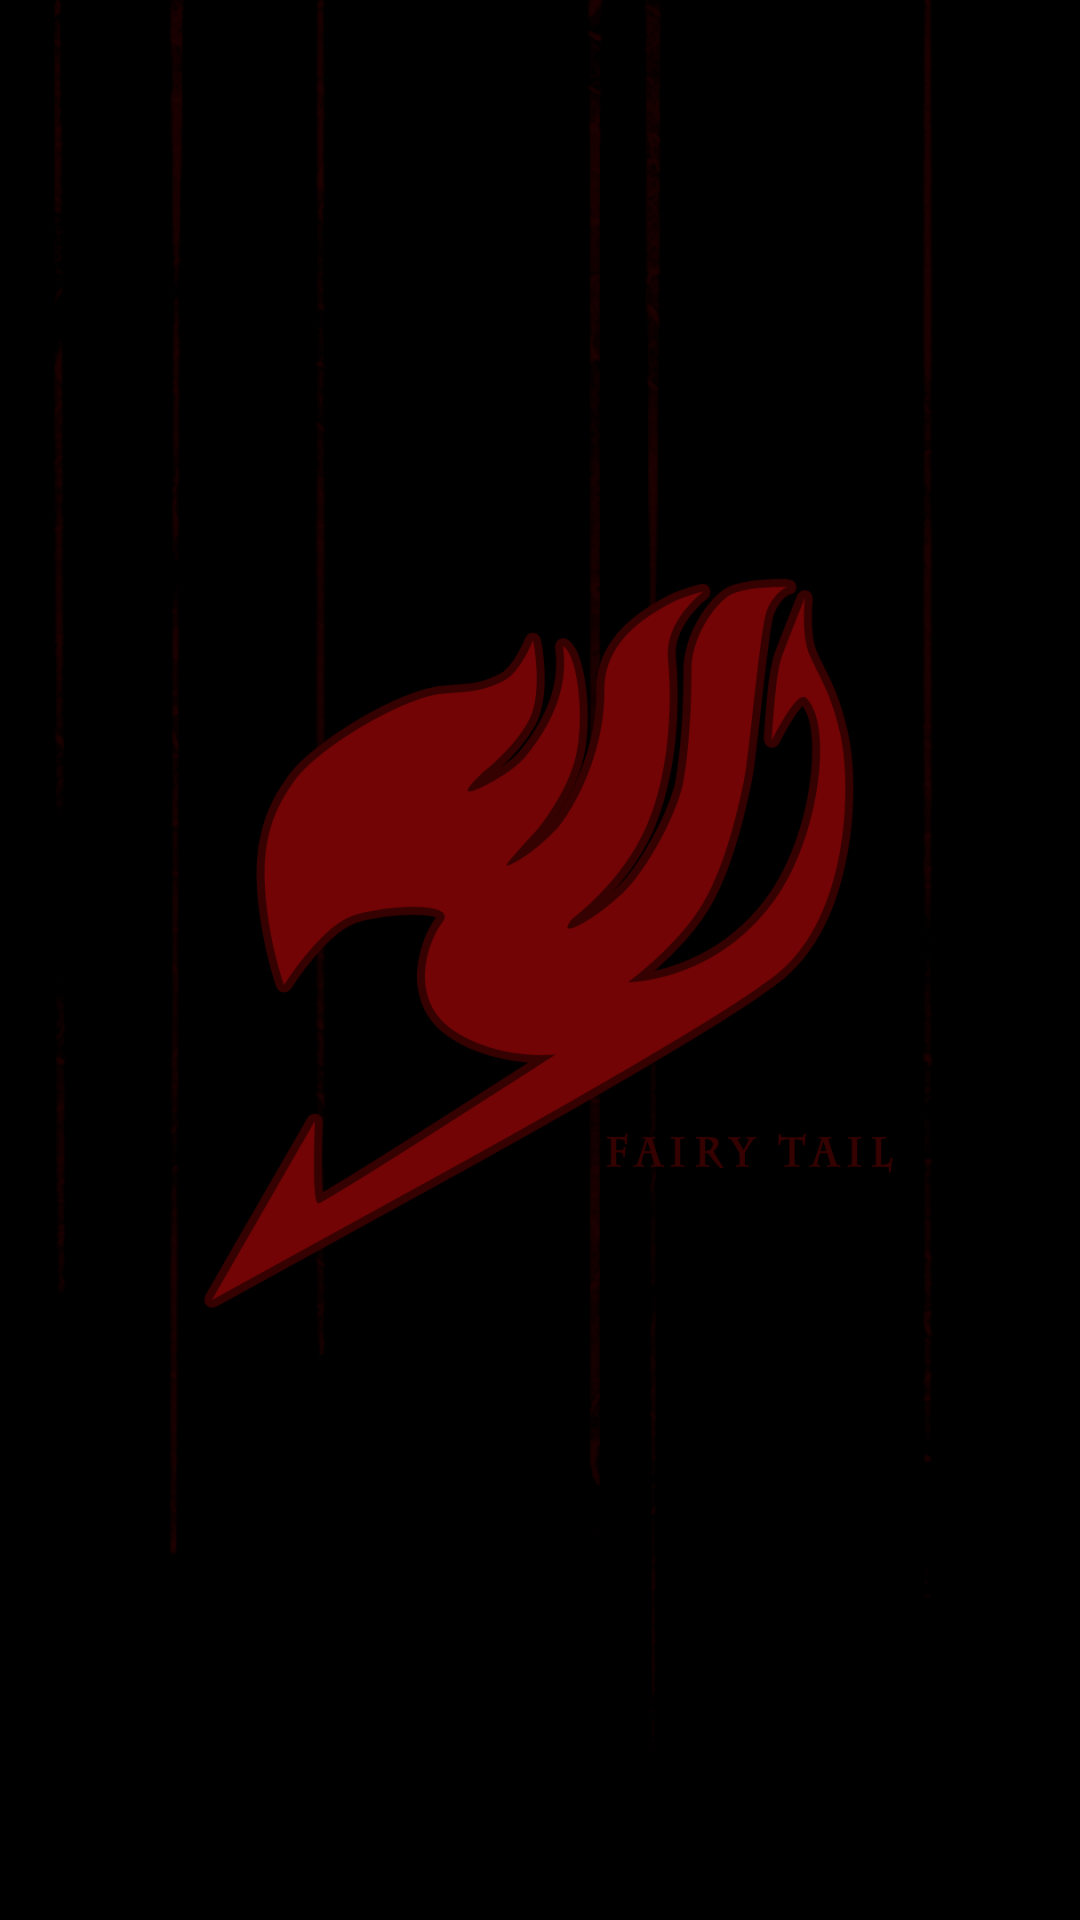 Fairy Tail Logo Wallpaper Full HD On Wallpaper 1080p HD. Fairy